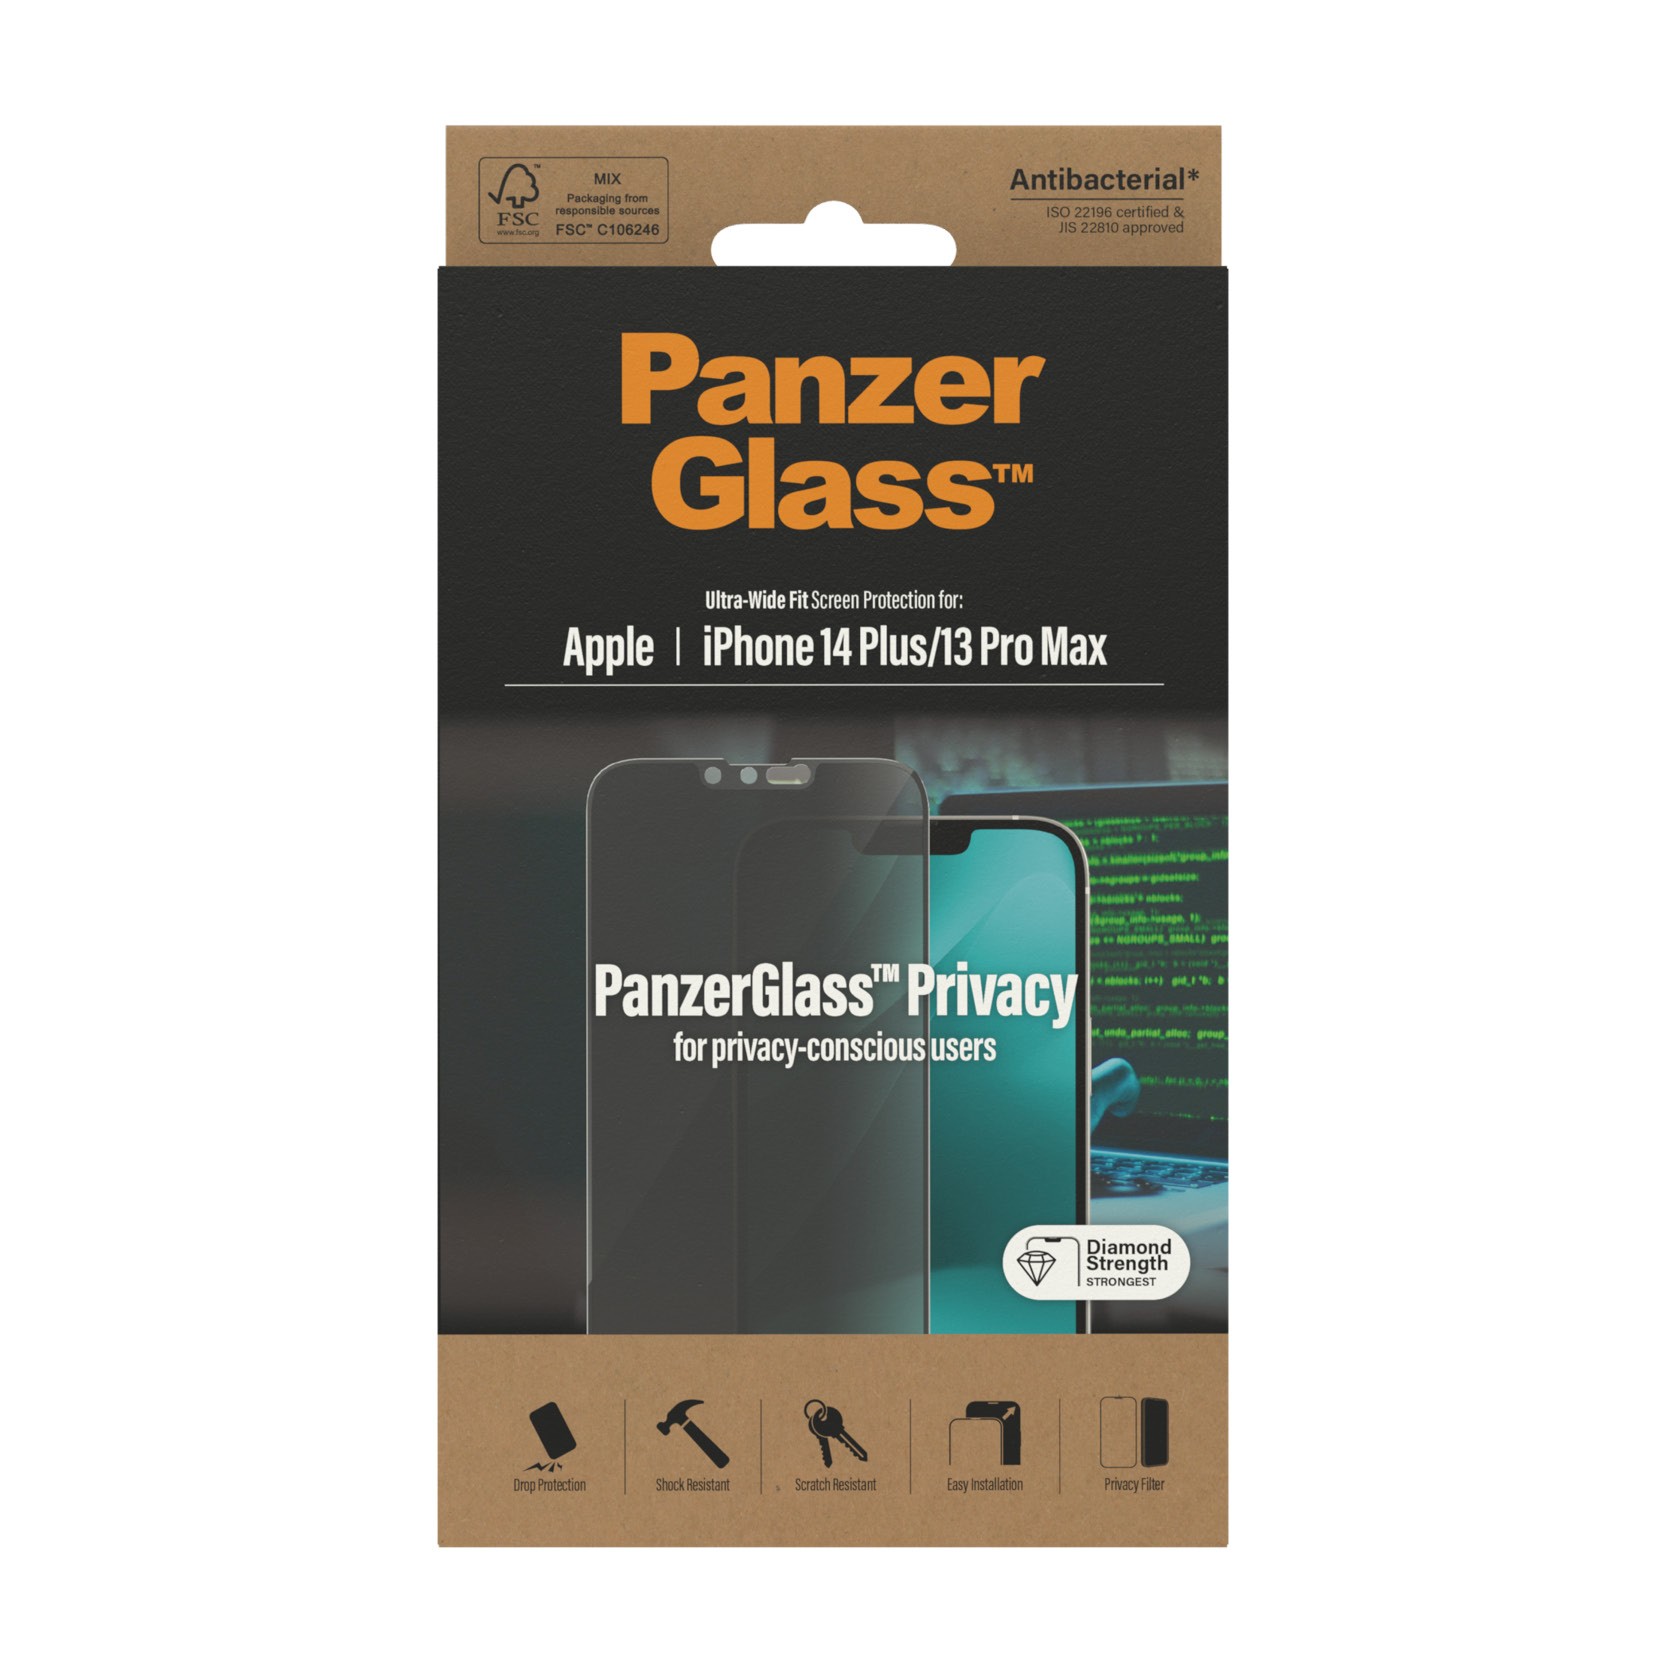 Panzerglass ™ Apple iPhone 13 Pro Max UWF Privacy Ghost Antibacterial Screen Protector